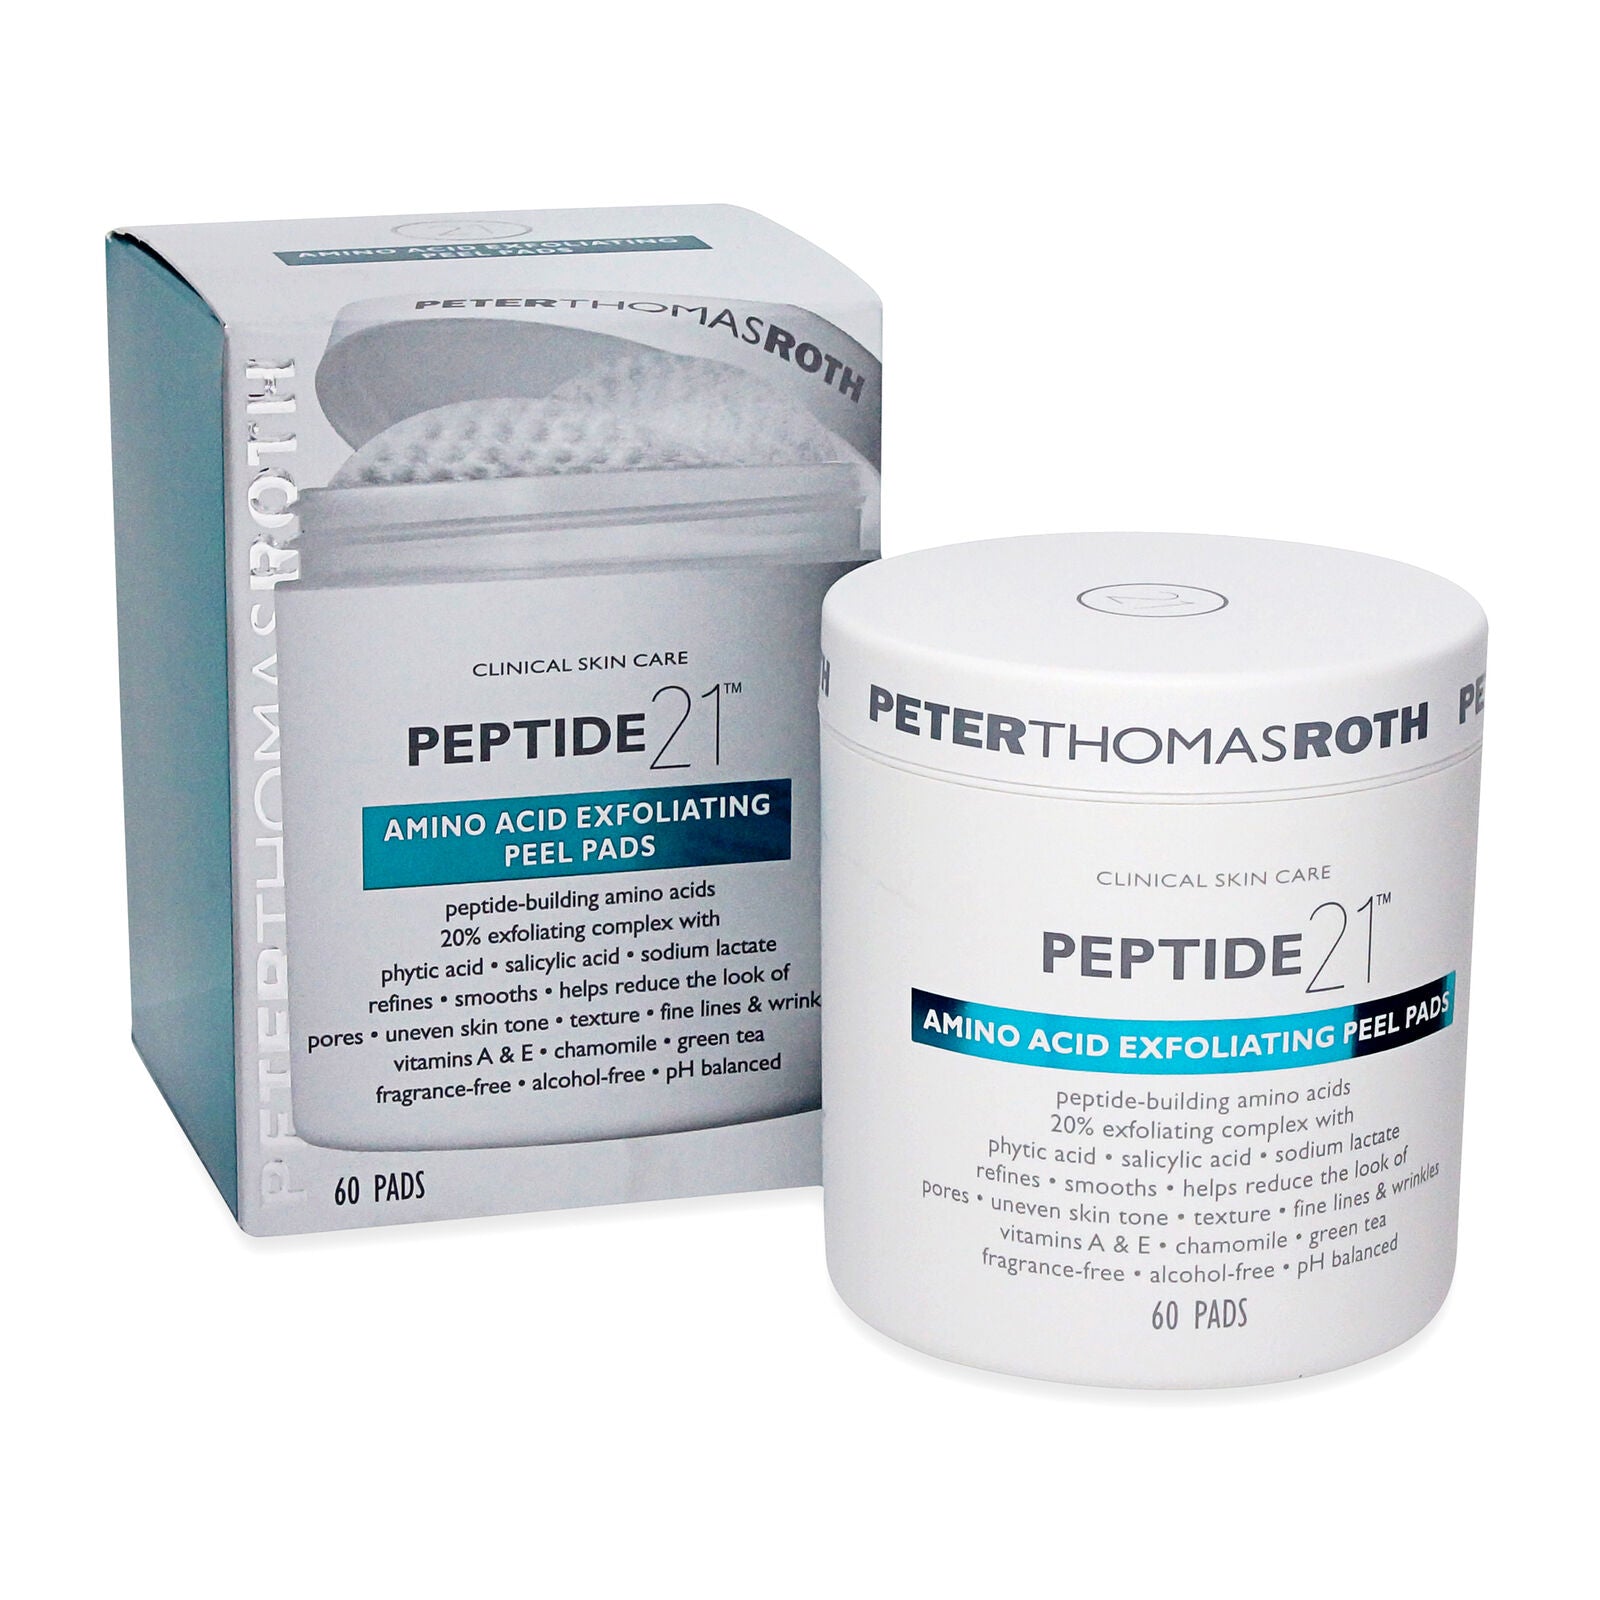 Peter Thomas Roth Peptide 21 Amino Acid Exfoliating Peel Pads 60 Cts